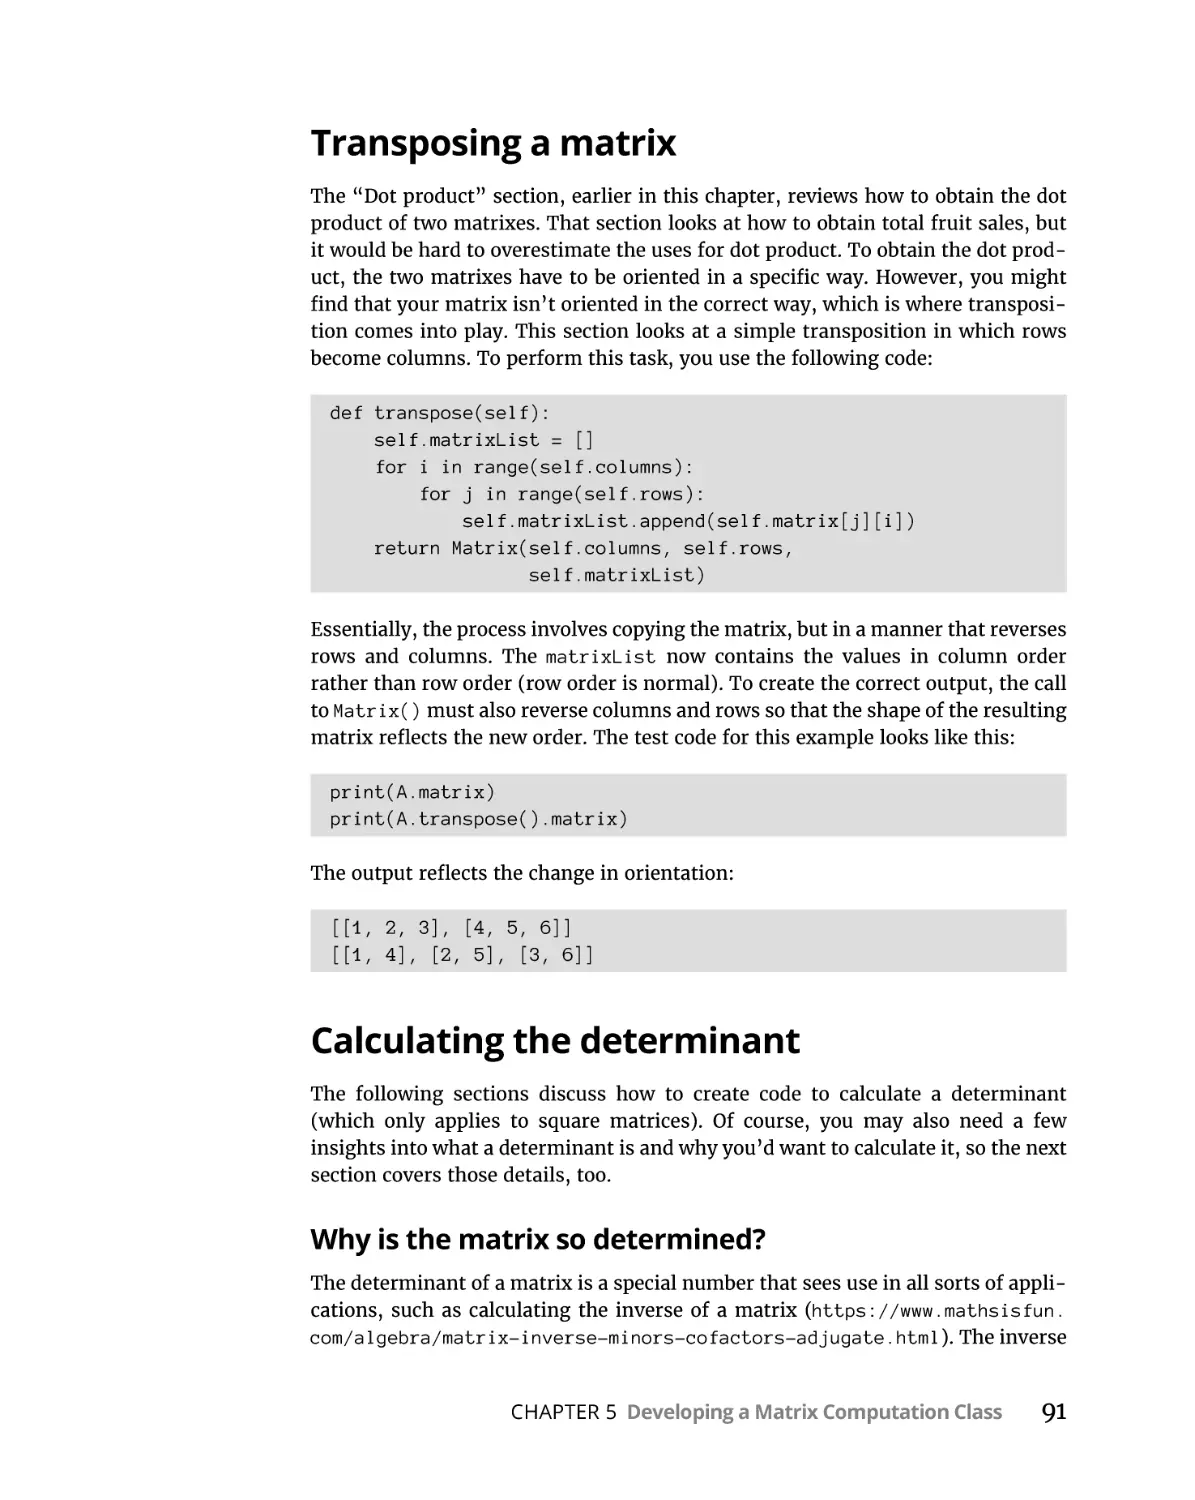 Transposing a matrix
Calculating the determinant